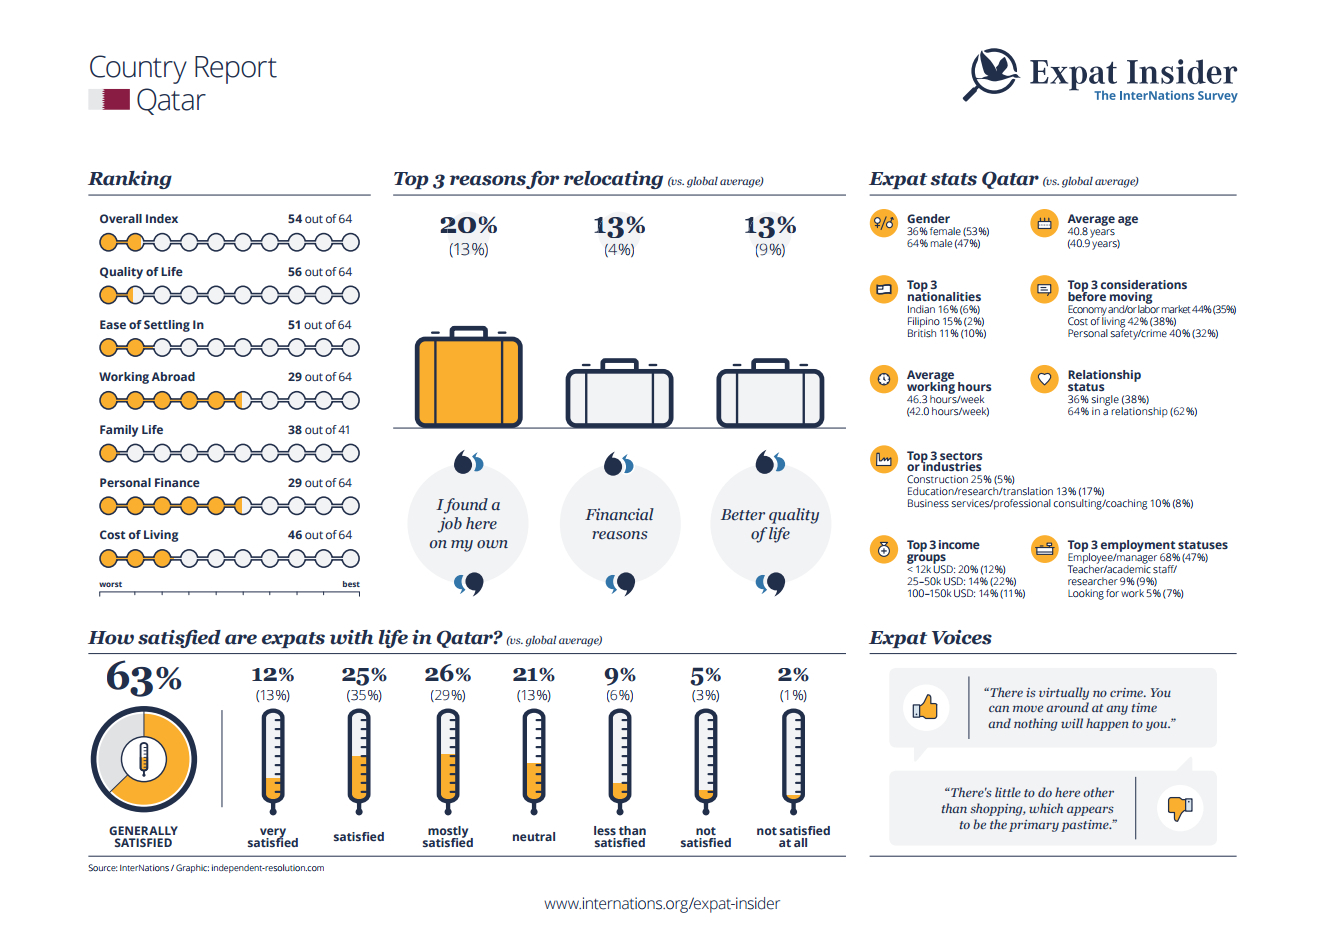 Expat statistics for Qatar - infographic